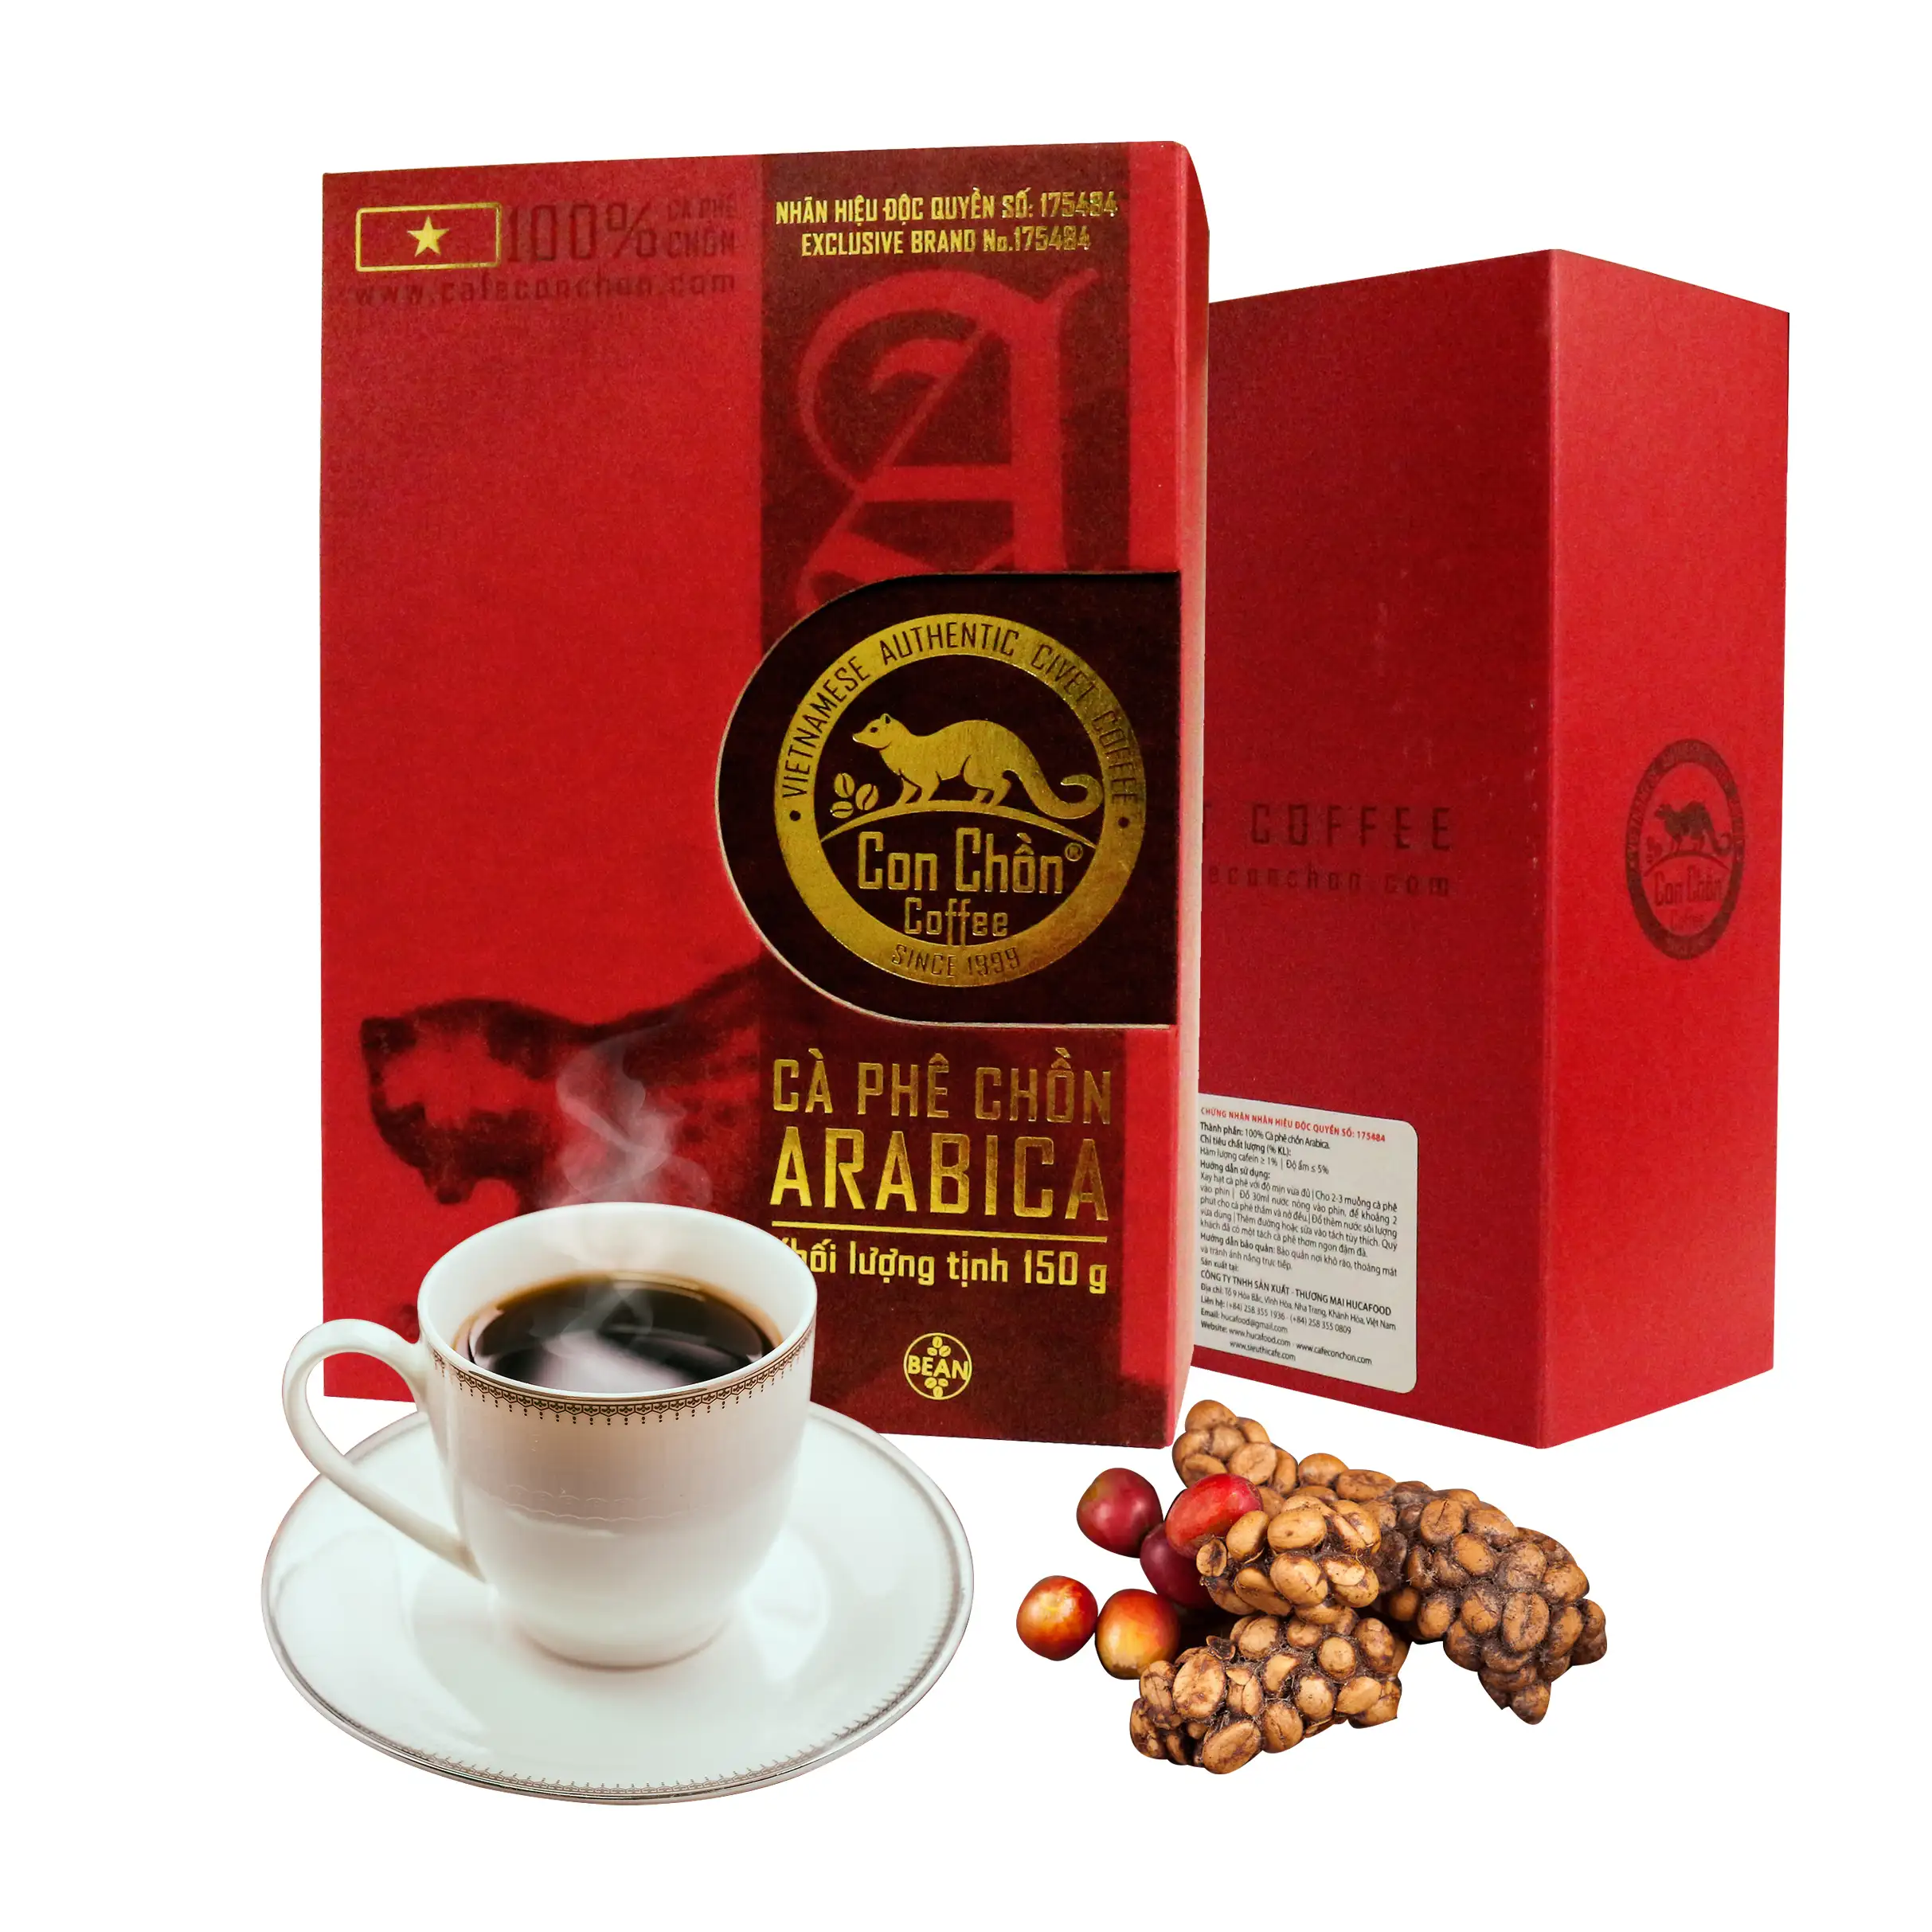 OEM, ODM, מותג פרטי "זבד קפה"-ערביקה 150g אותנטי זבד קפה (kopi luwak), פרימיום מוצר, HucaFood מותג